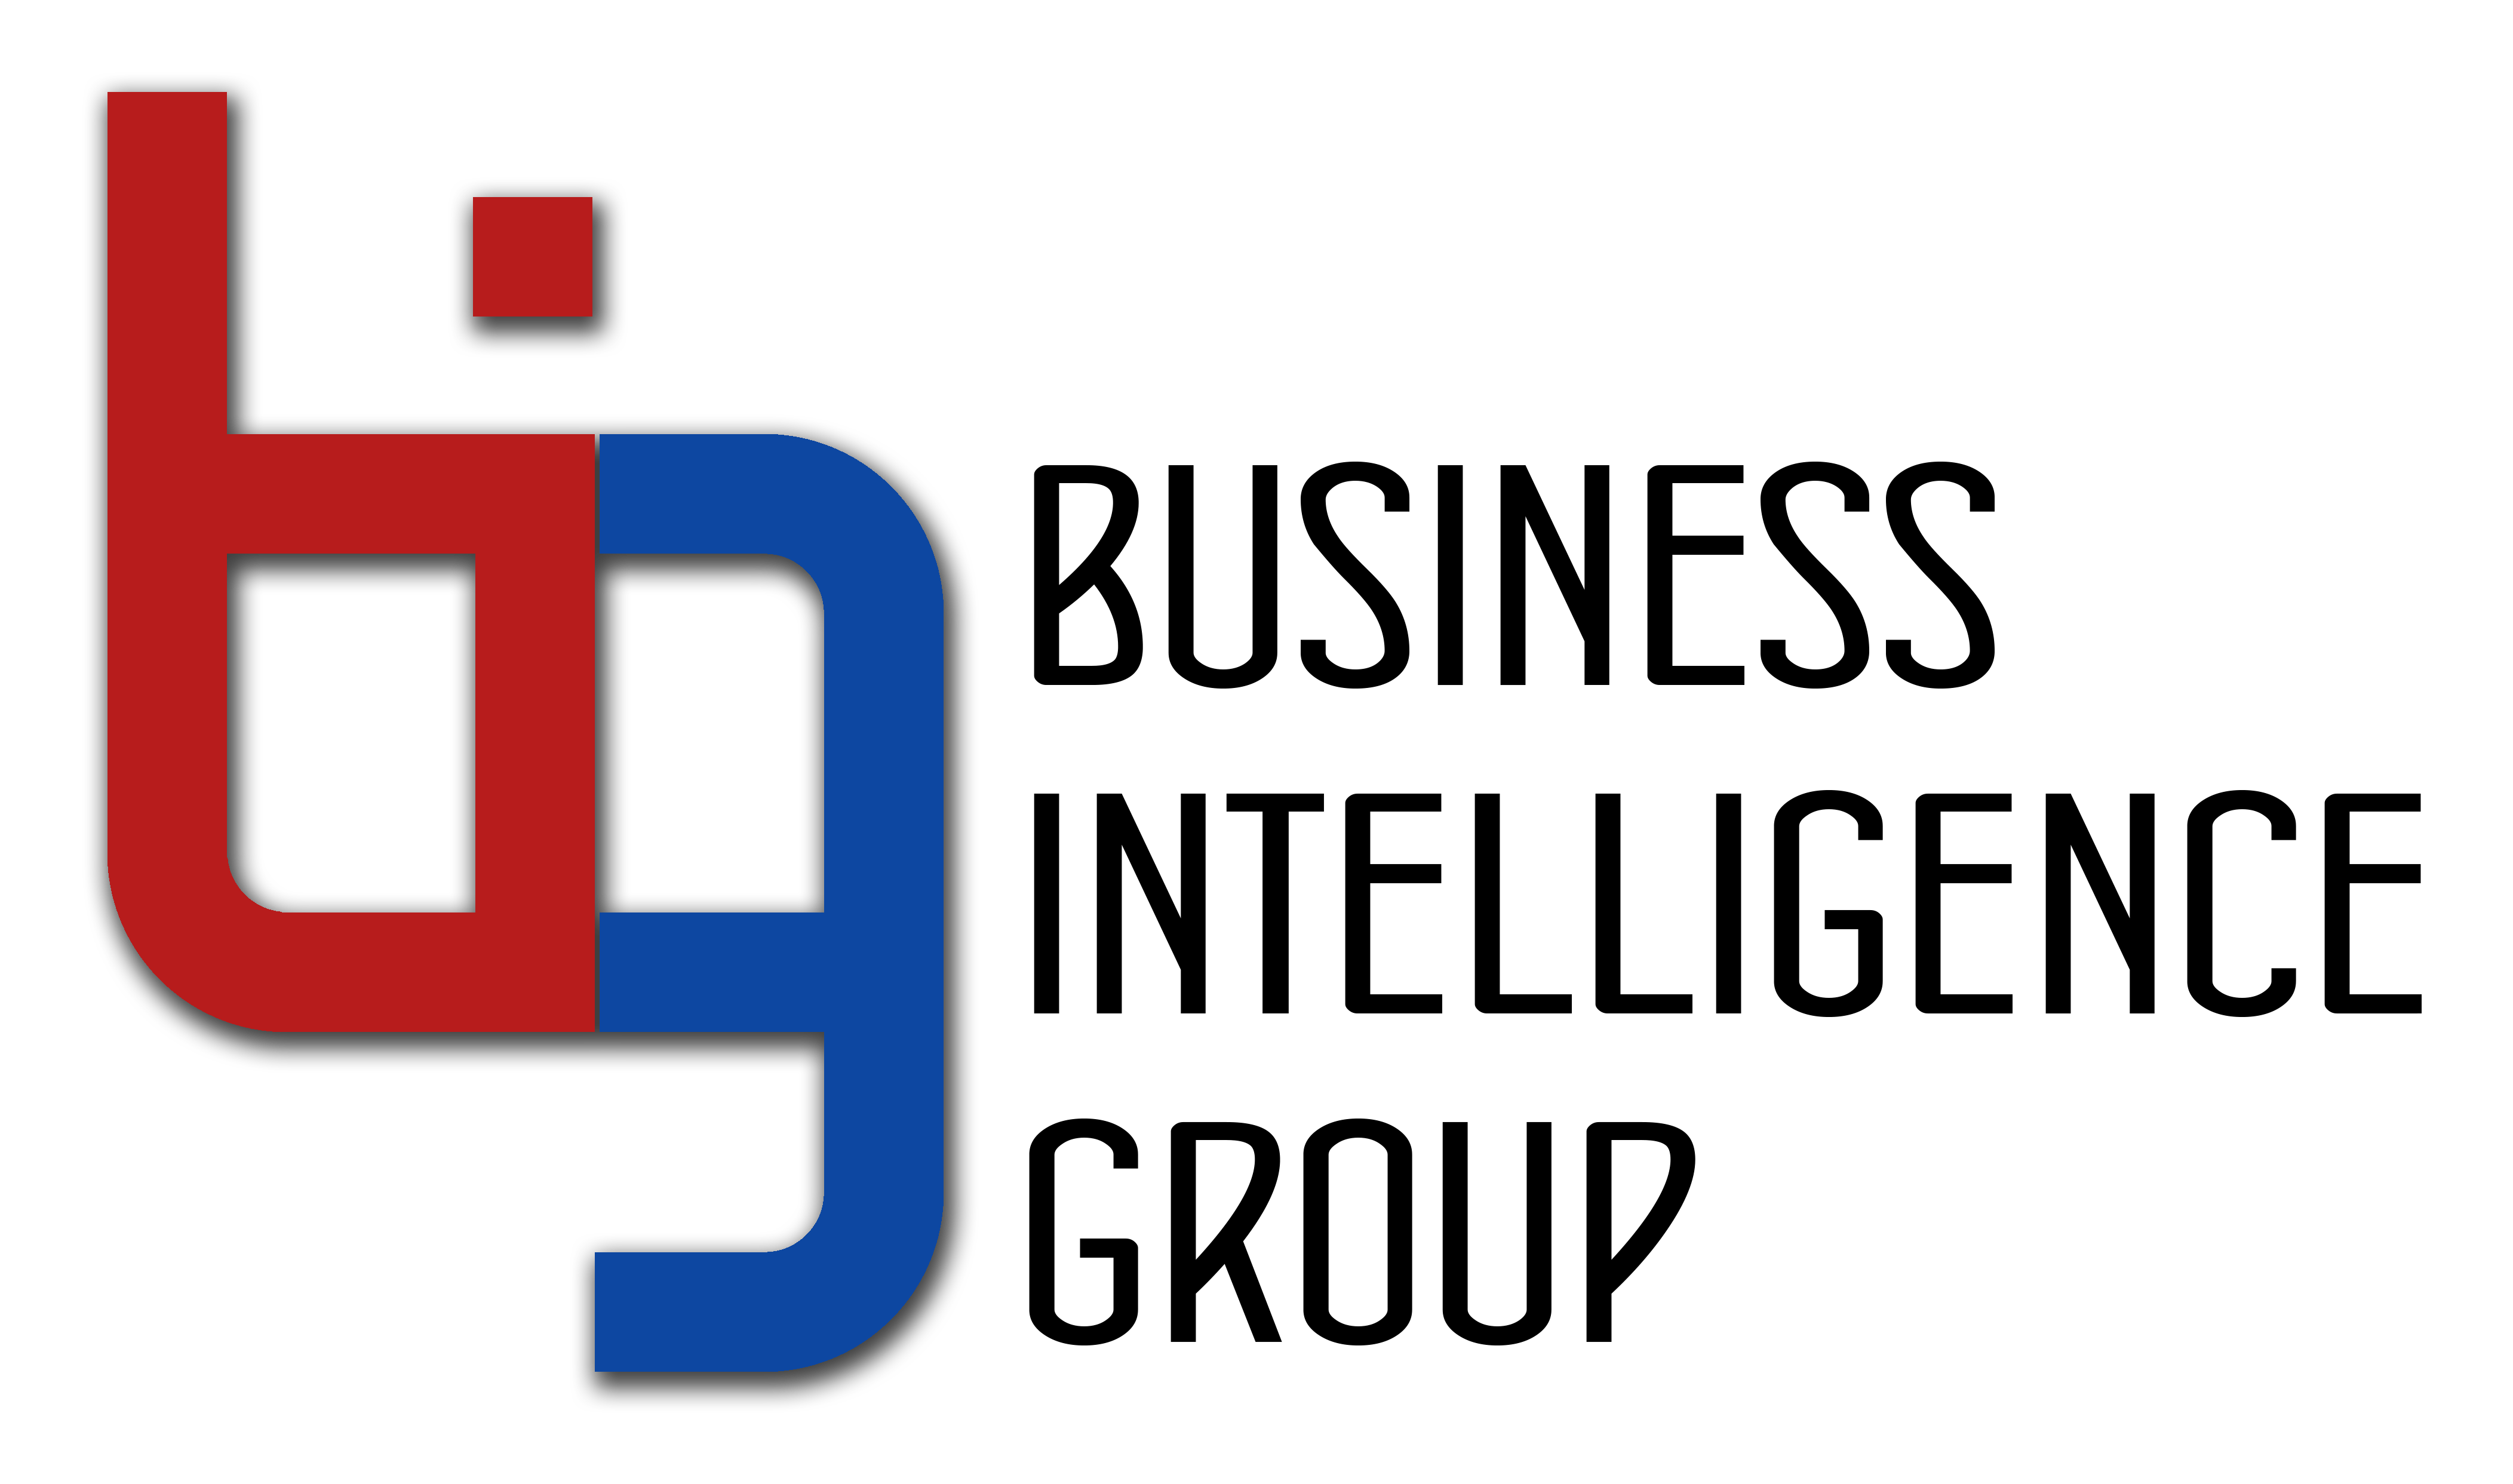 The Business Intelligence Group logo